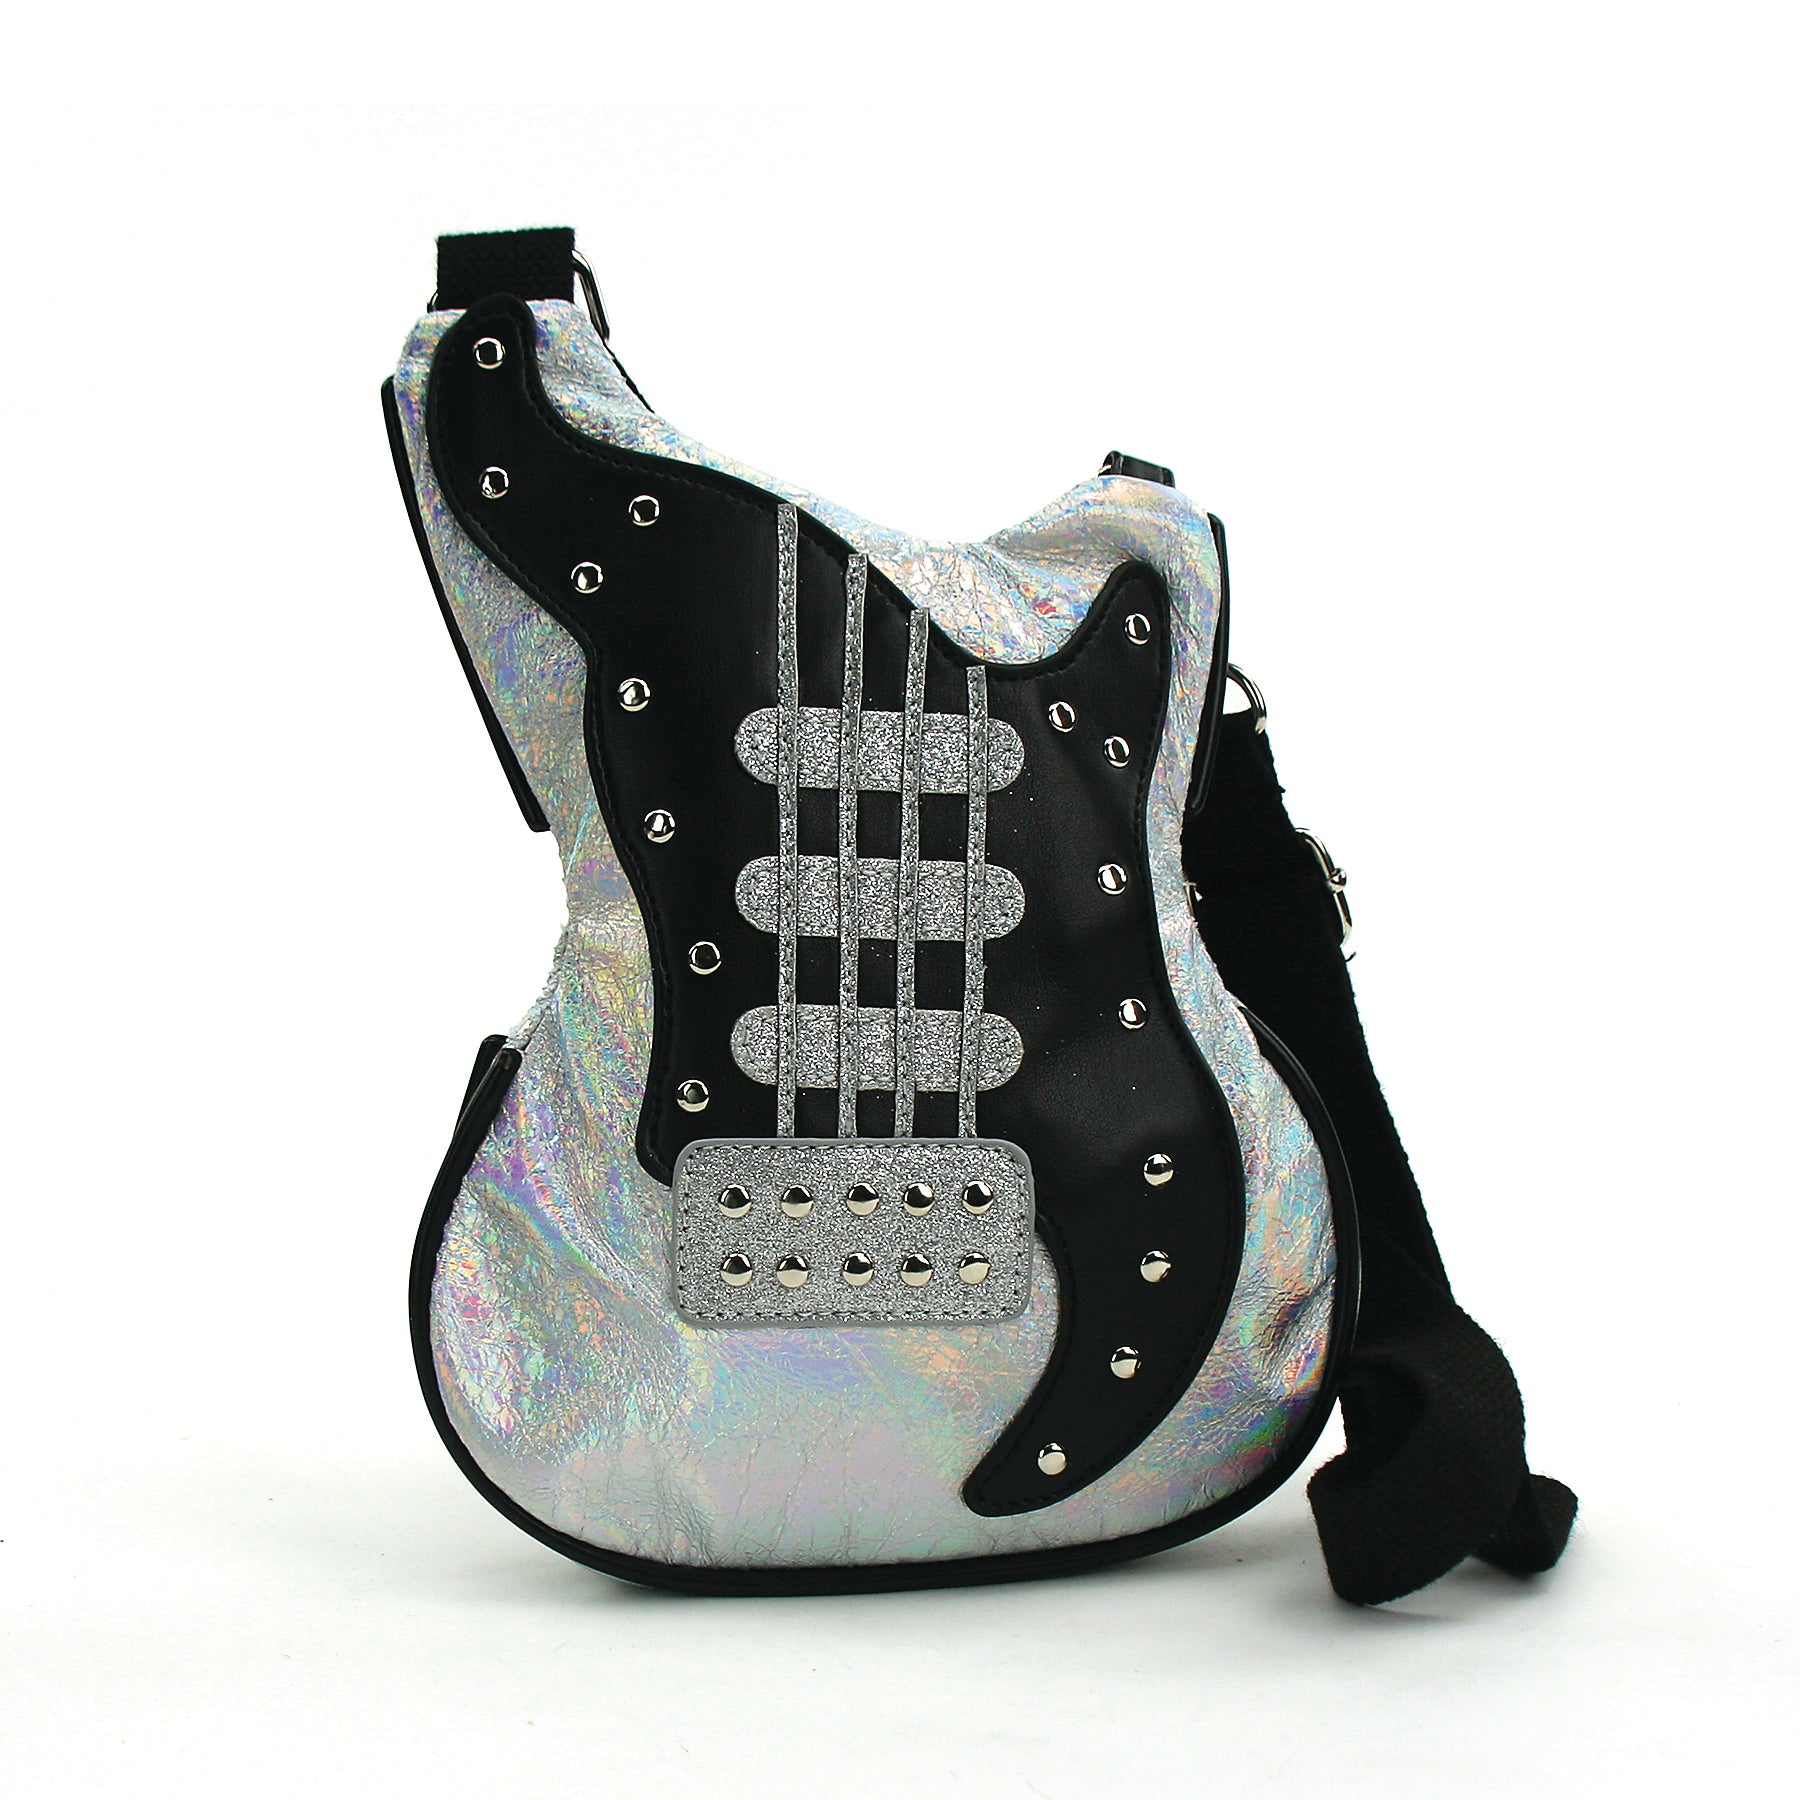 Guitar Crossbody Bag in Vinyl, silver color, front view